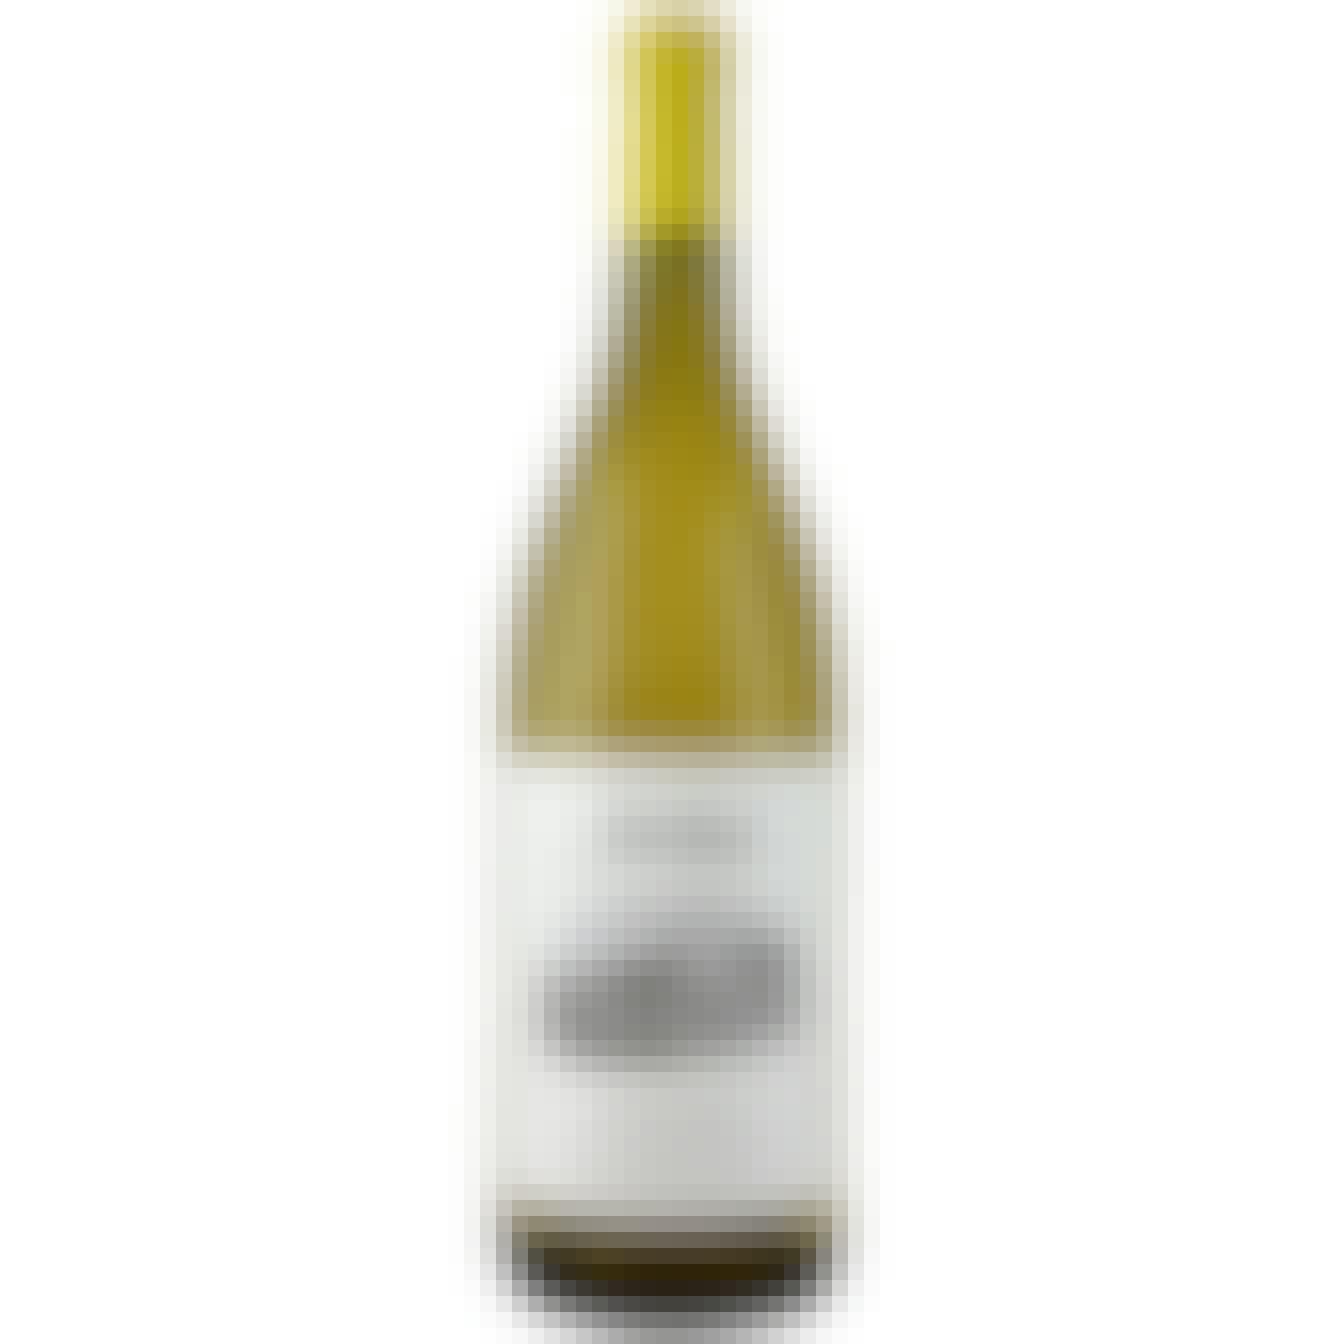 Jordan Winery Chardonnay